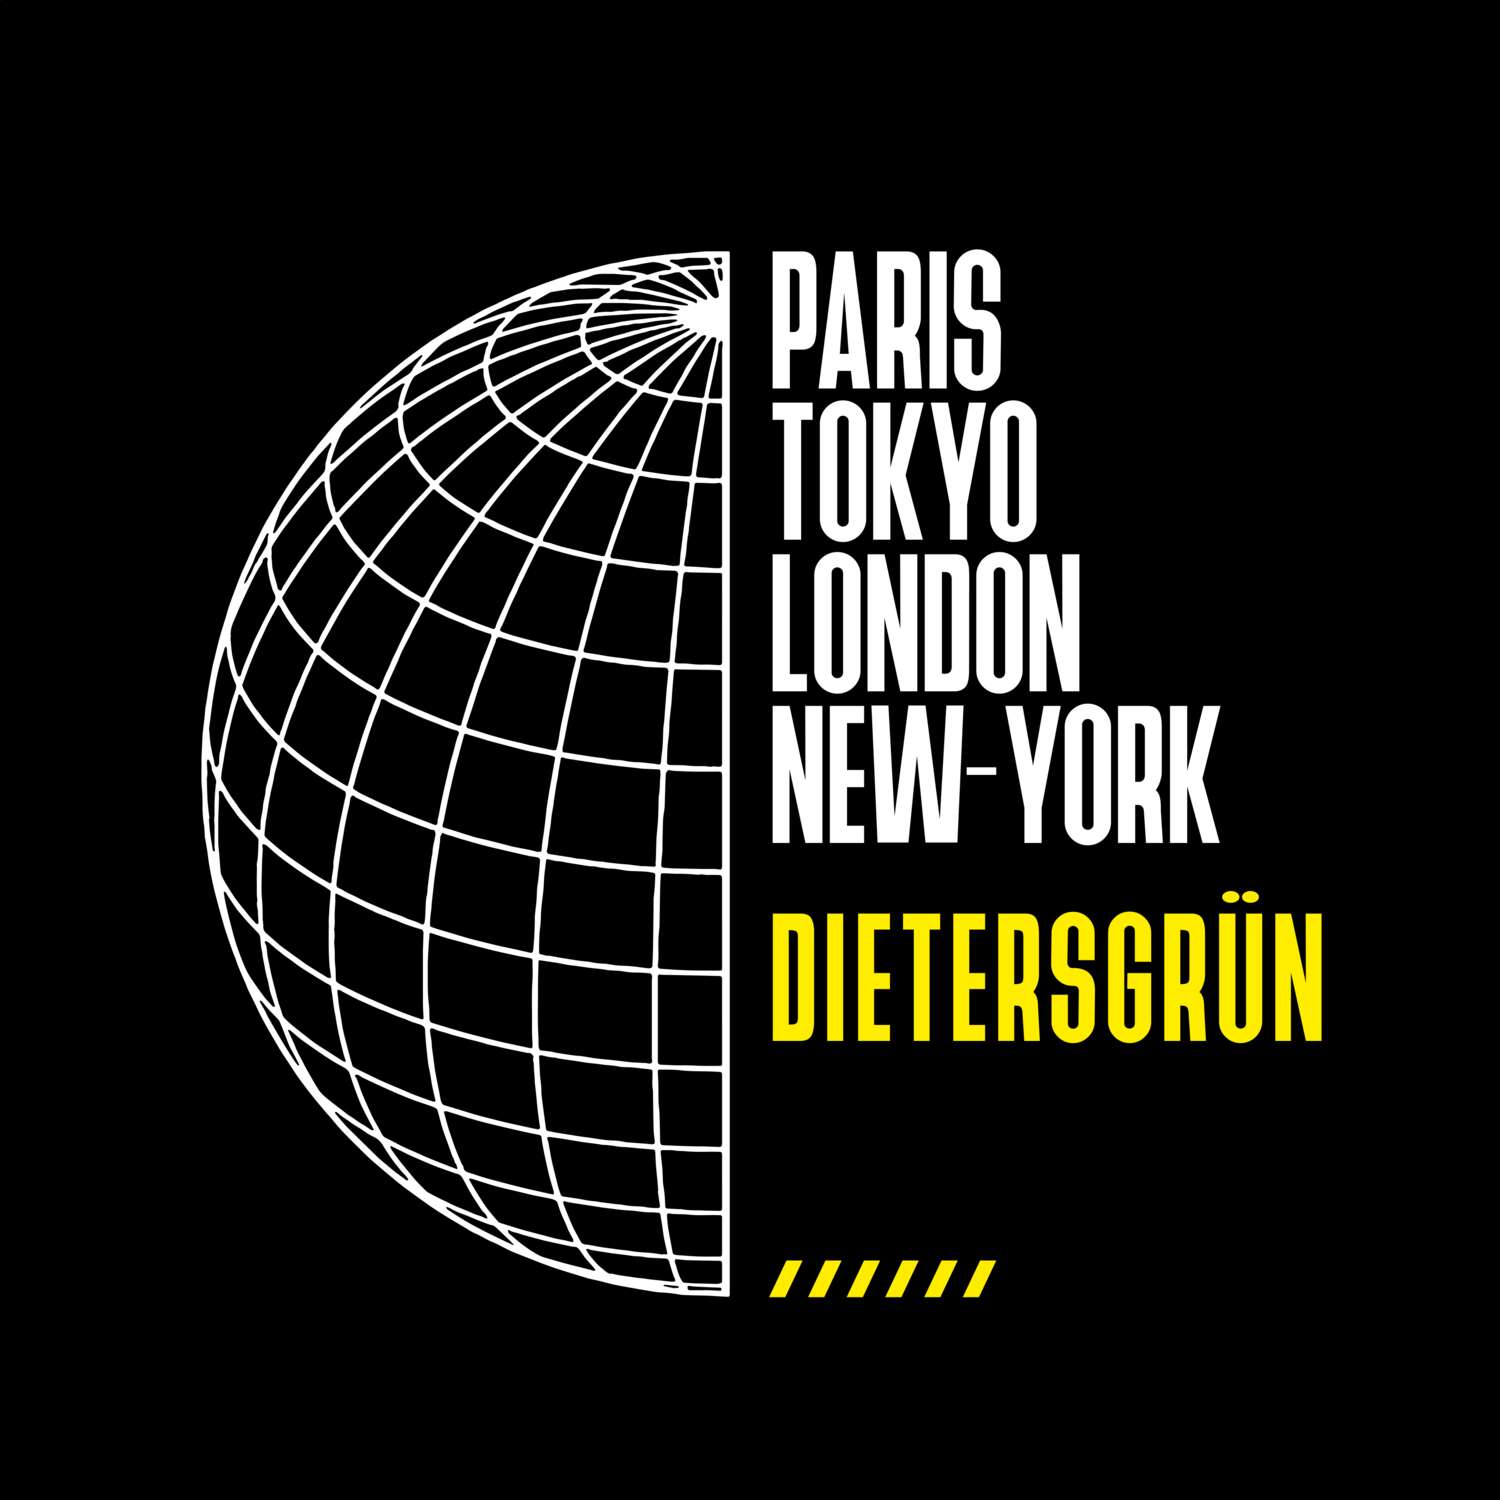 Dietersgrün T-Shirt »Paris Tokyo London«